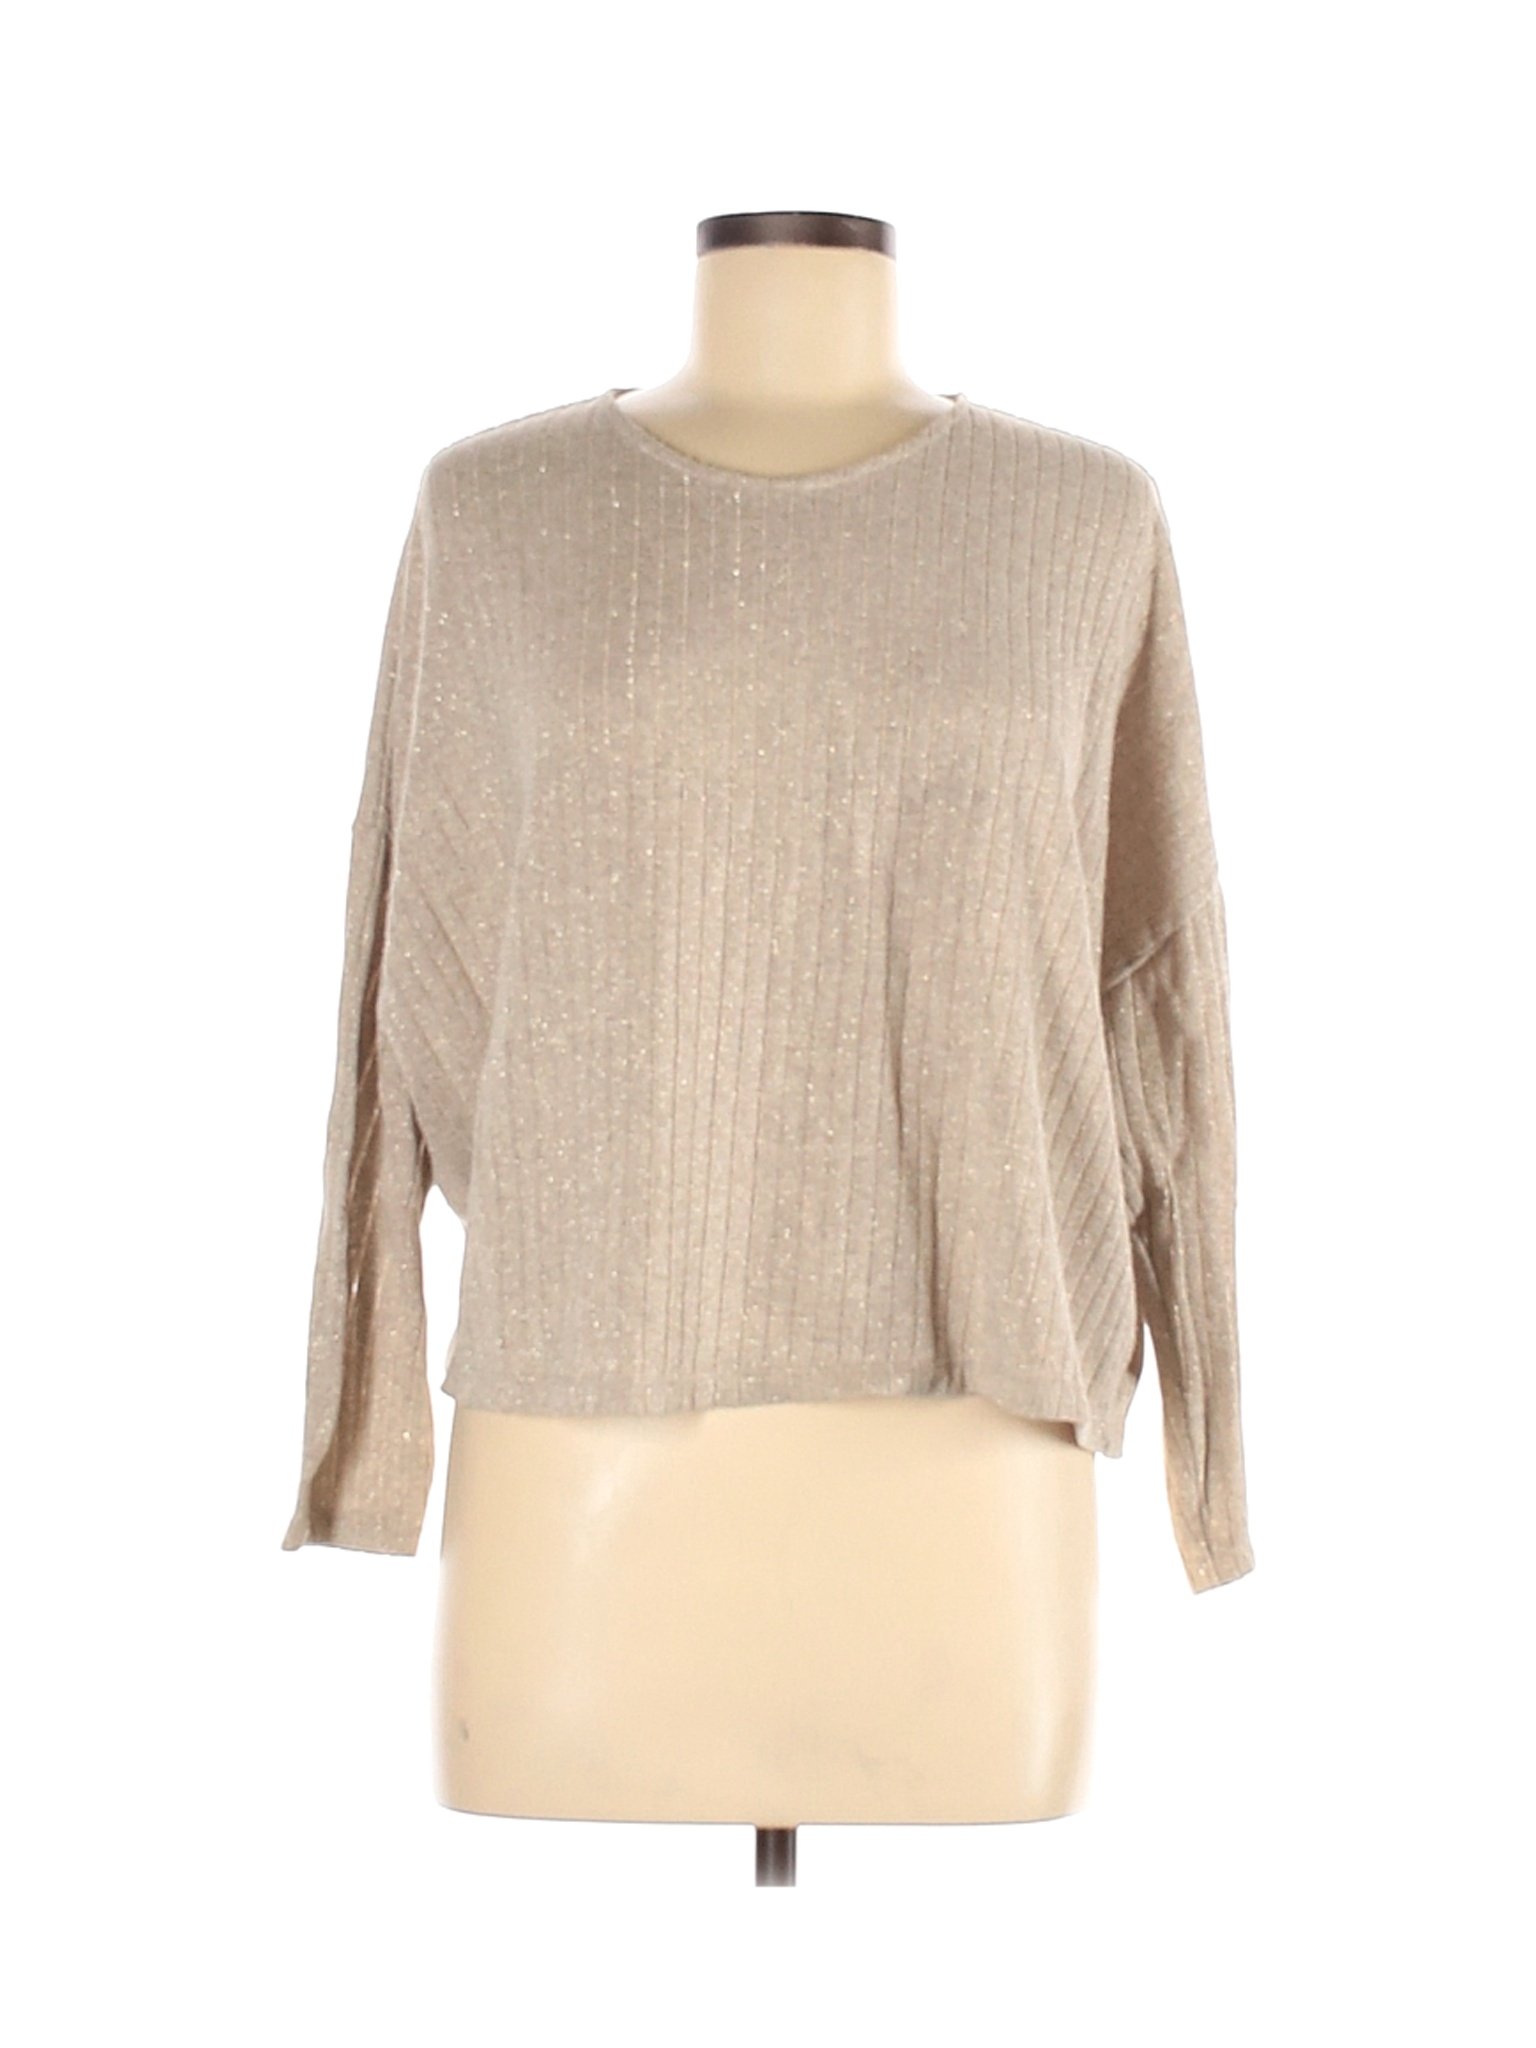 Zara Basic Women Brown Pullover Sweater M | eBay